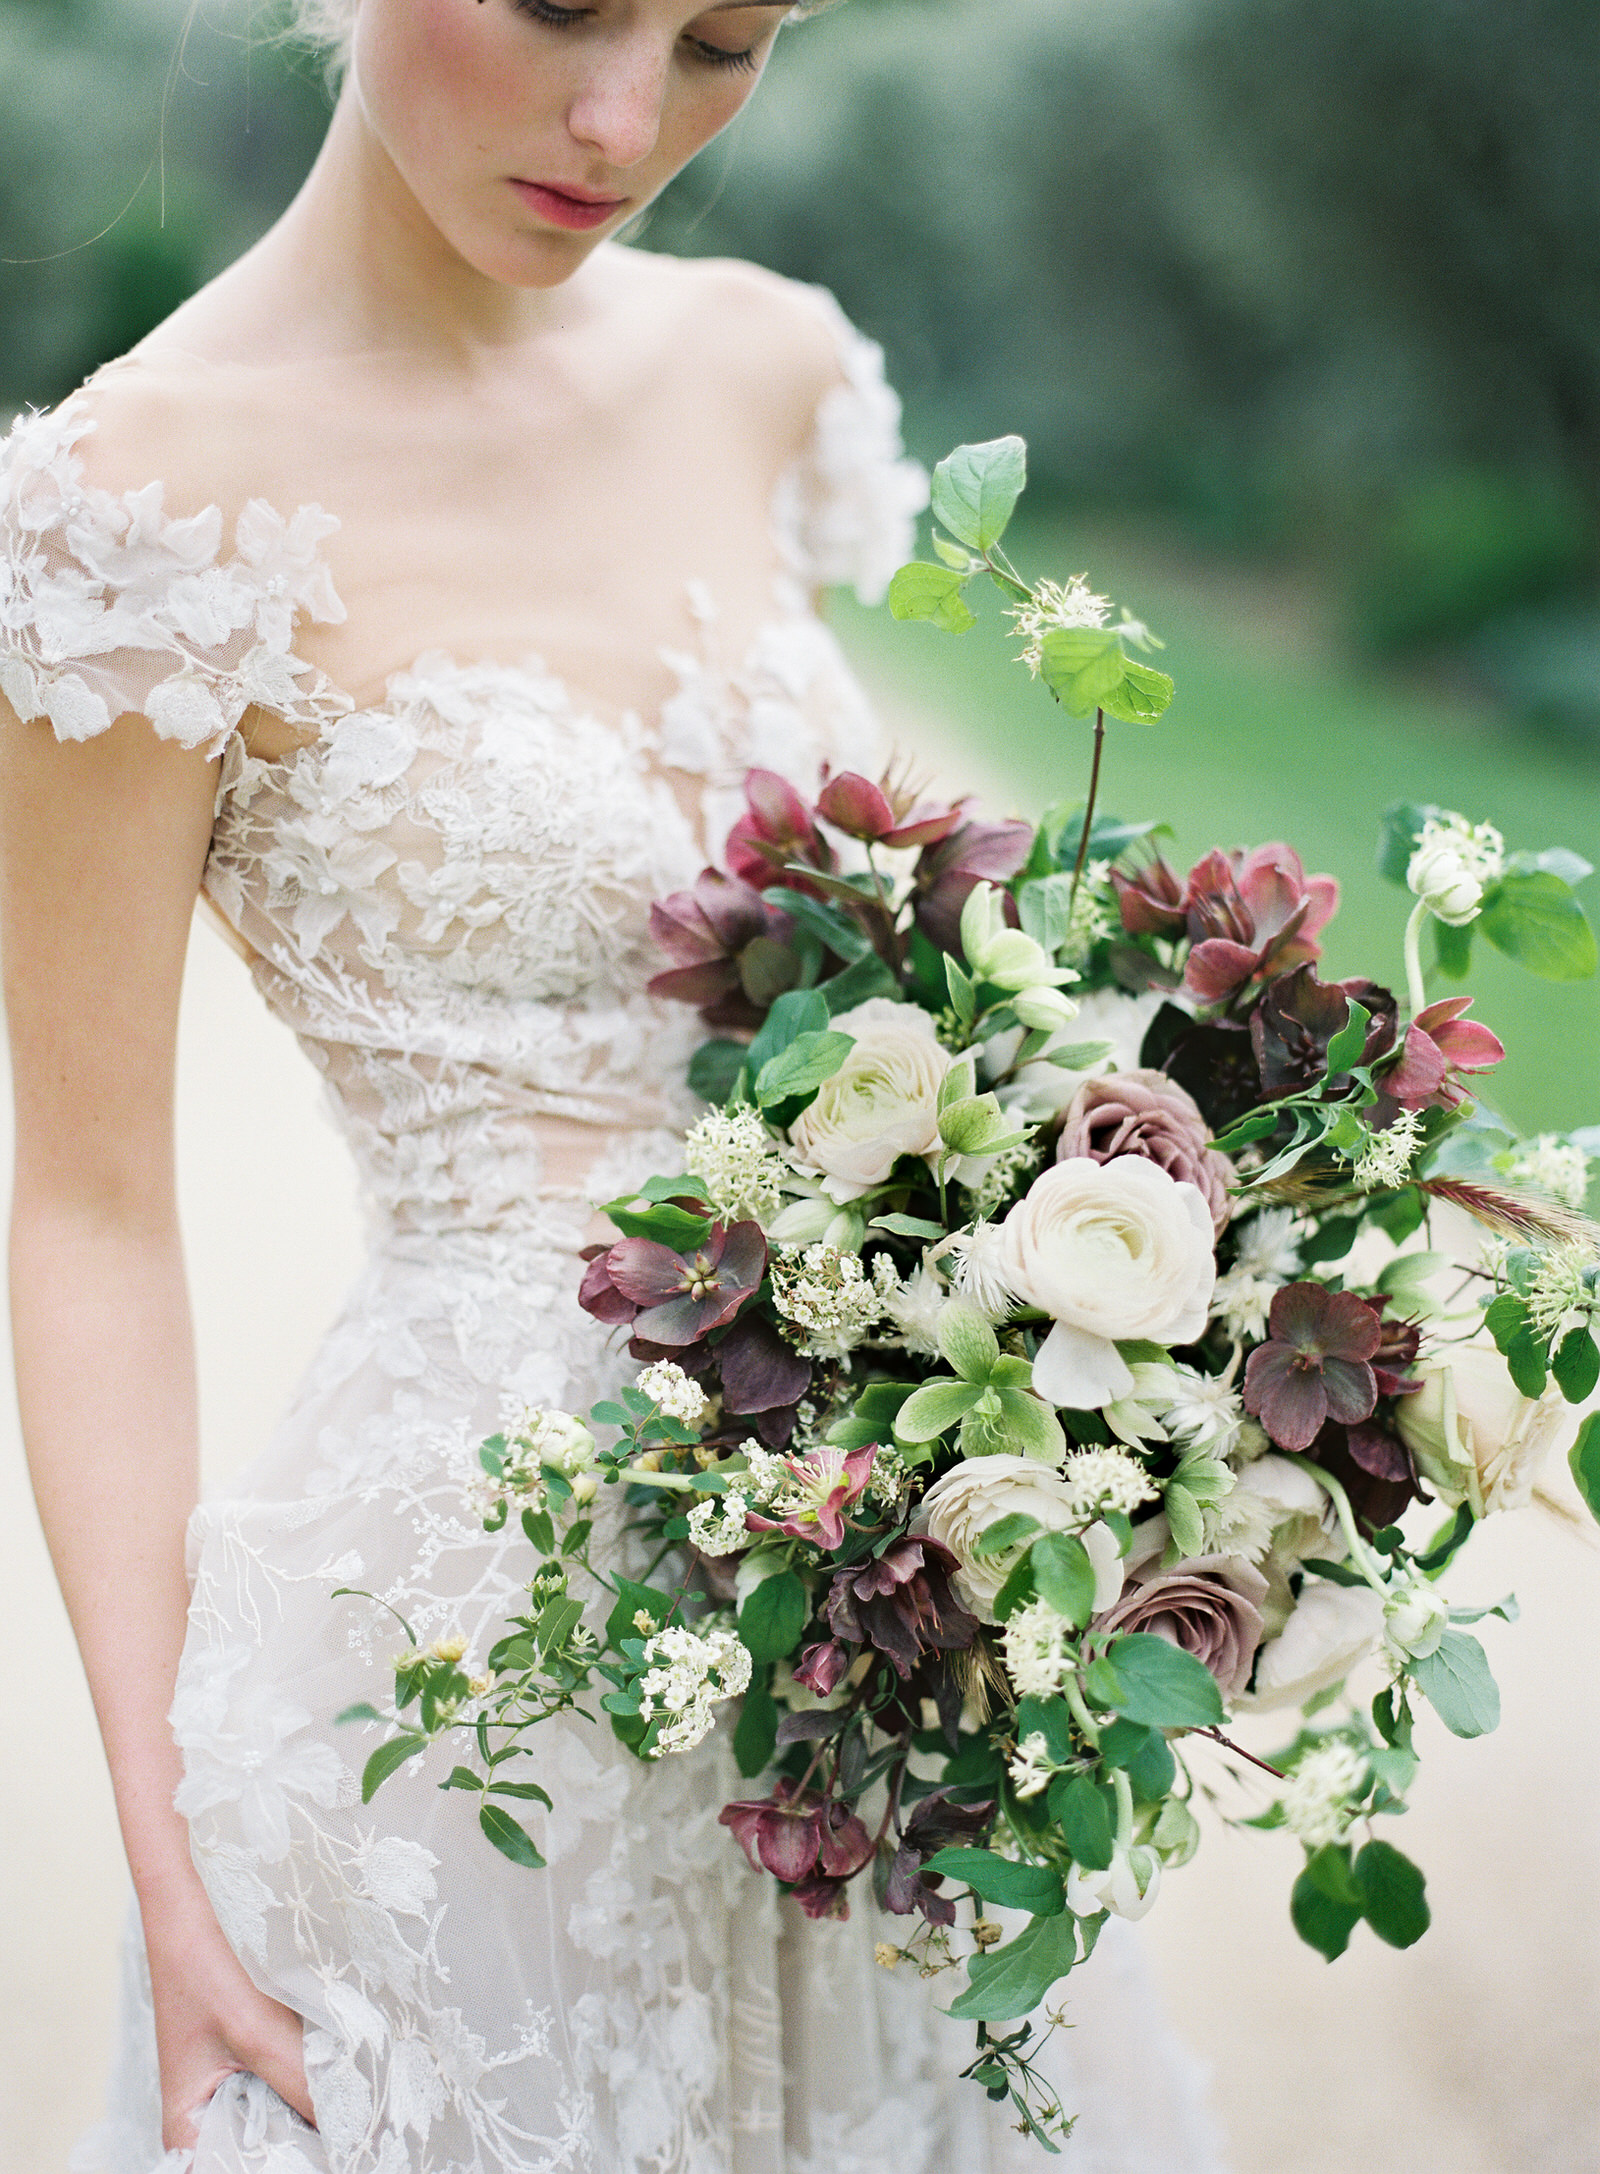 designs by hemingway - hellebore bridal bouquet